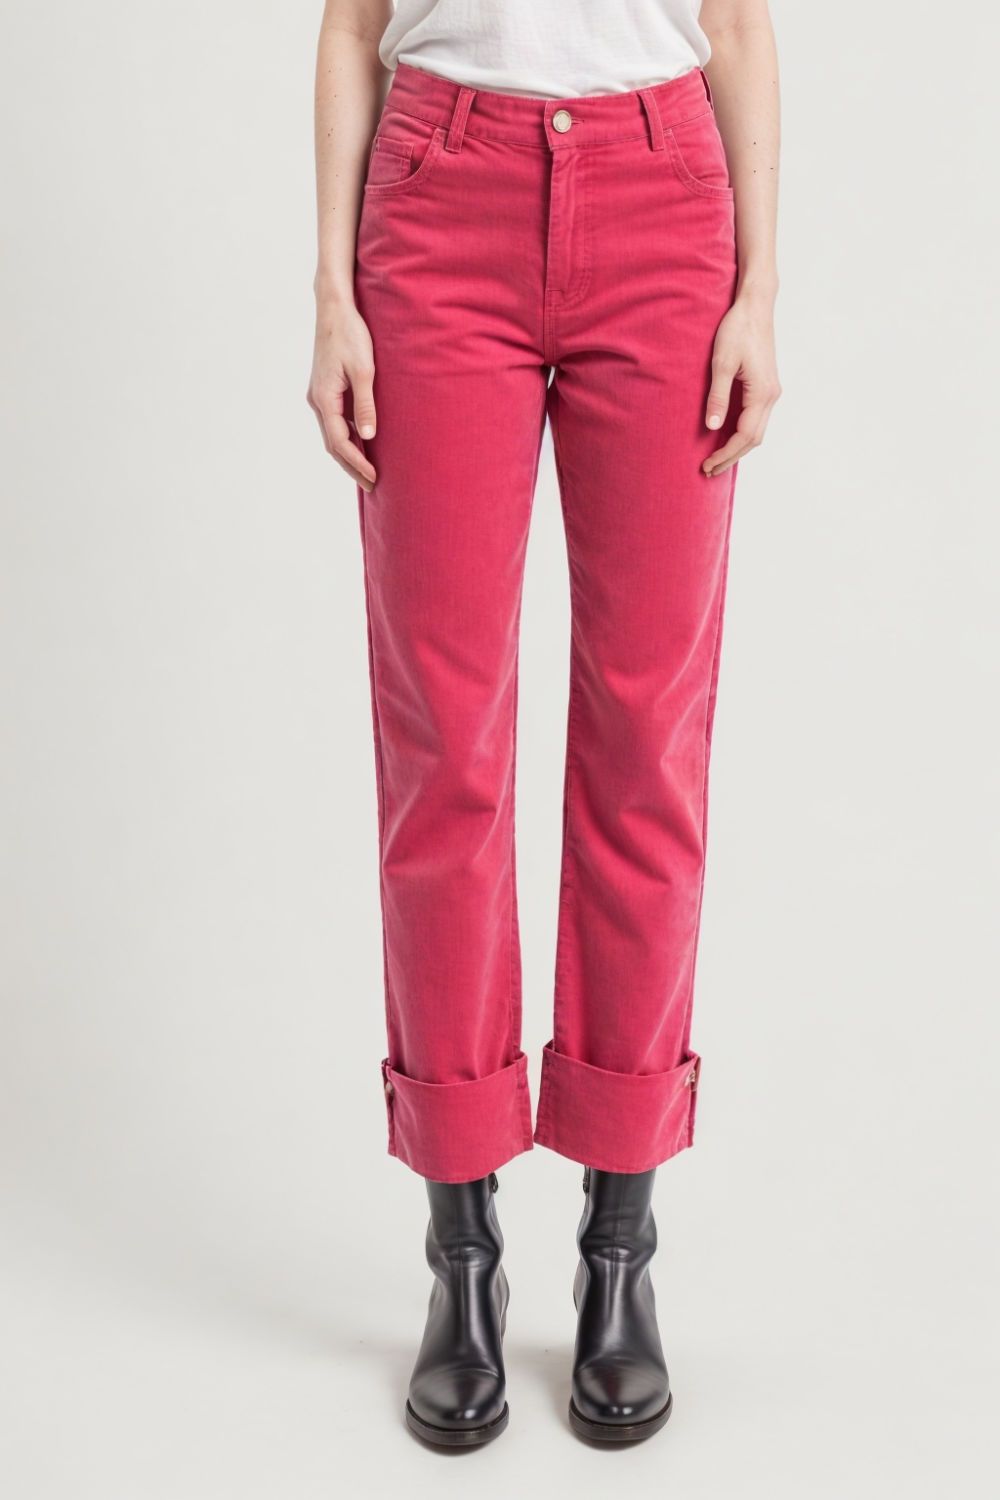 raspberry pink corduroy pants